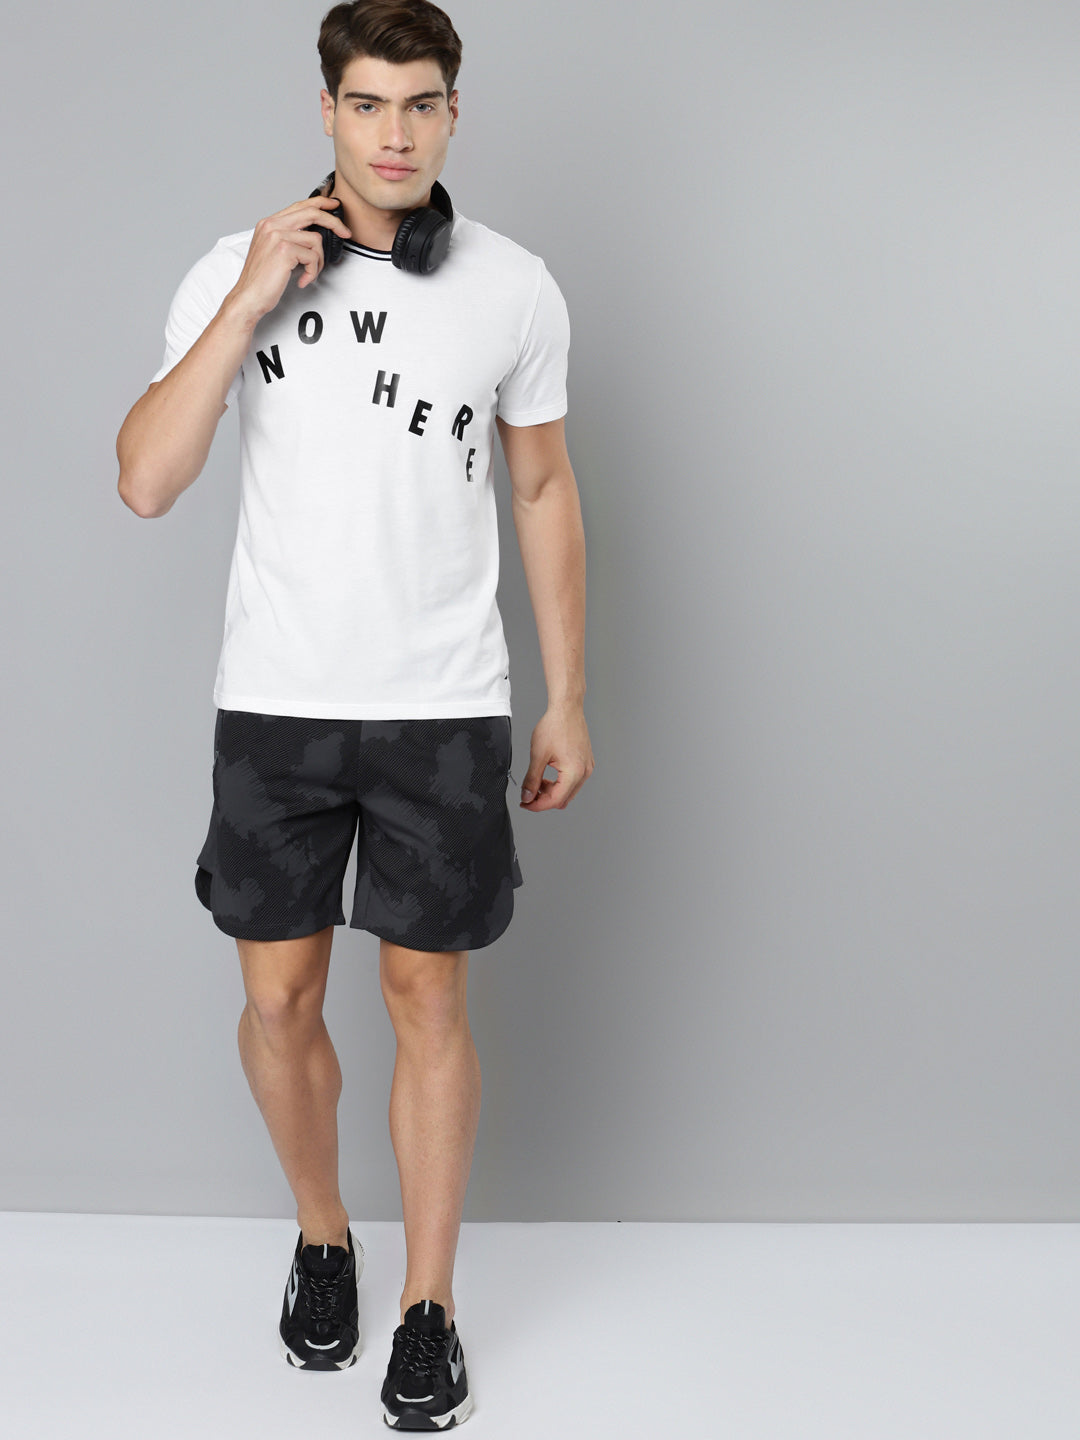 Alcis Men White  Black Typography Printed Slim Fit Running T-shirt